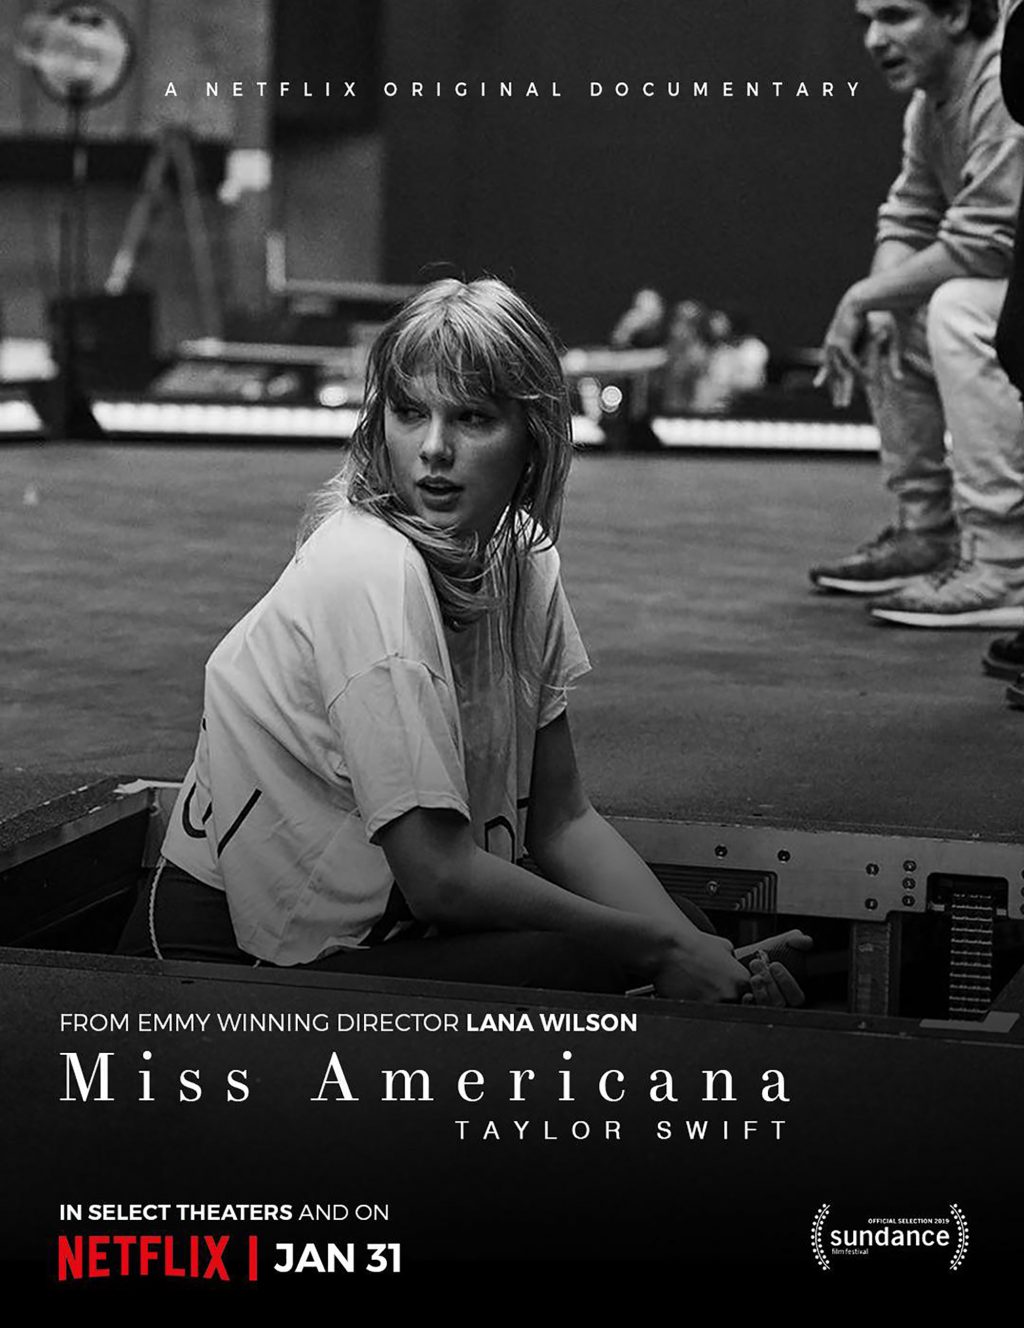 âm nhạc miss americana